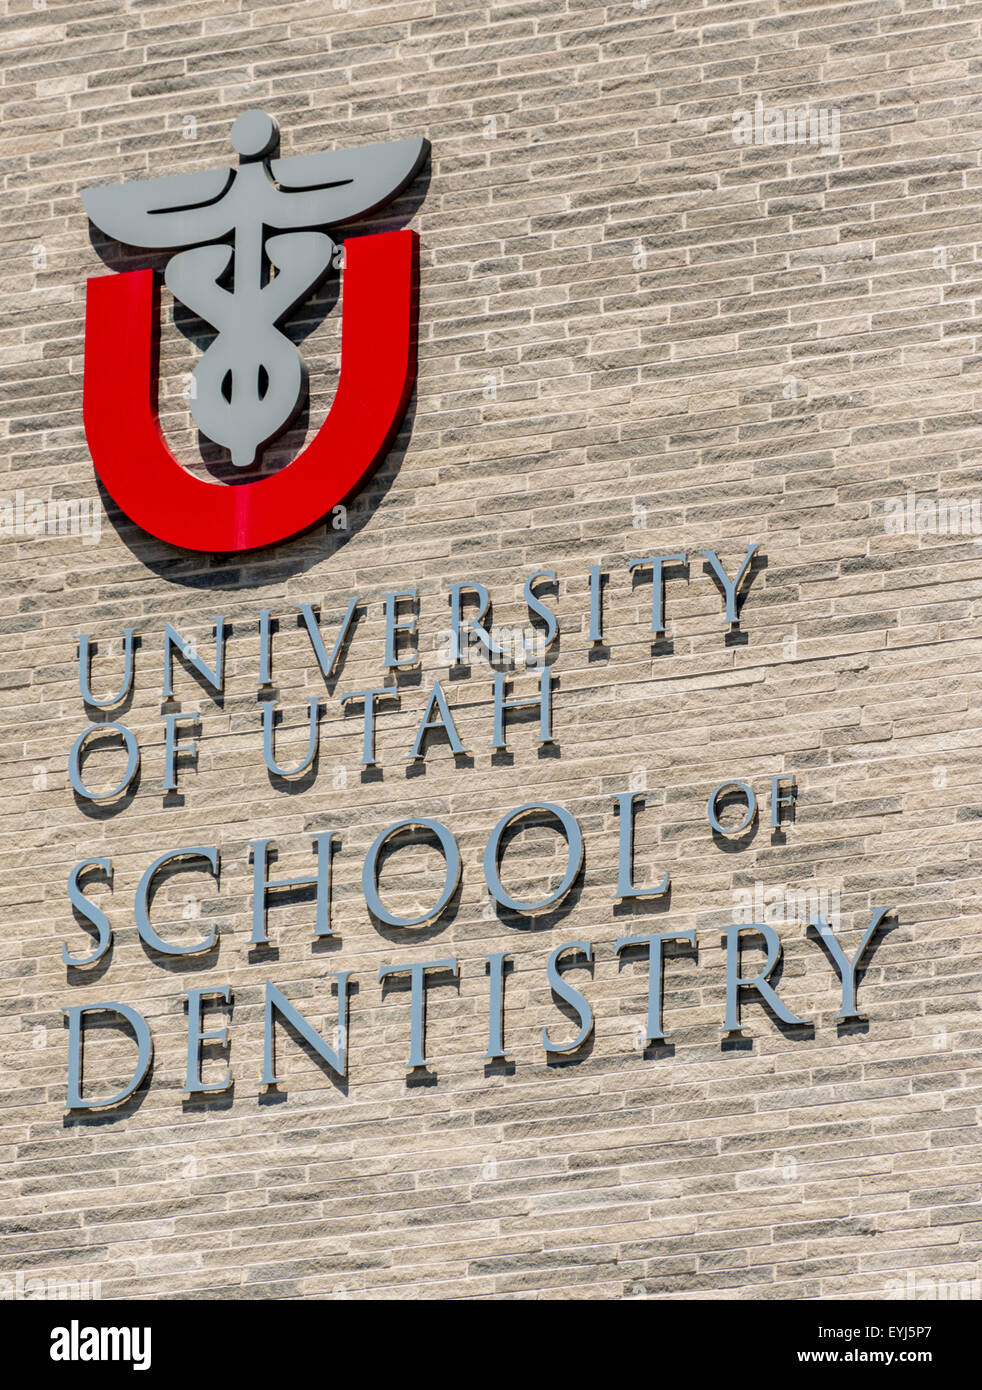 University of Utah School of Dentistry - Salt Lake City Banque D'Images